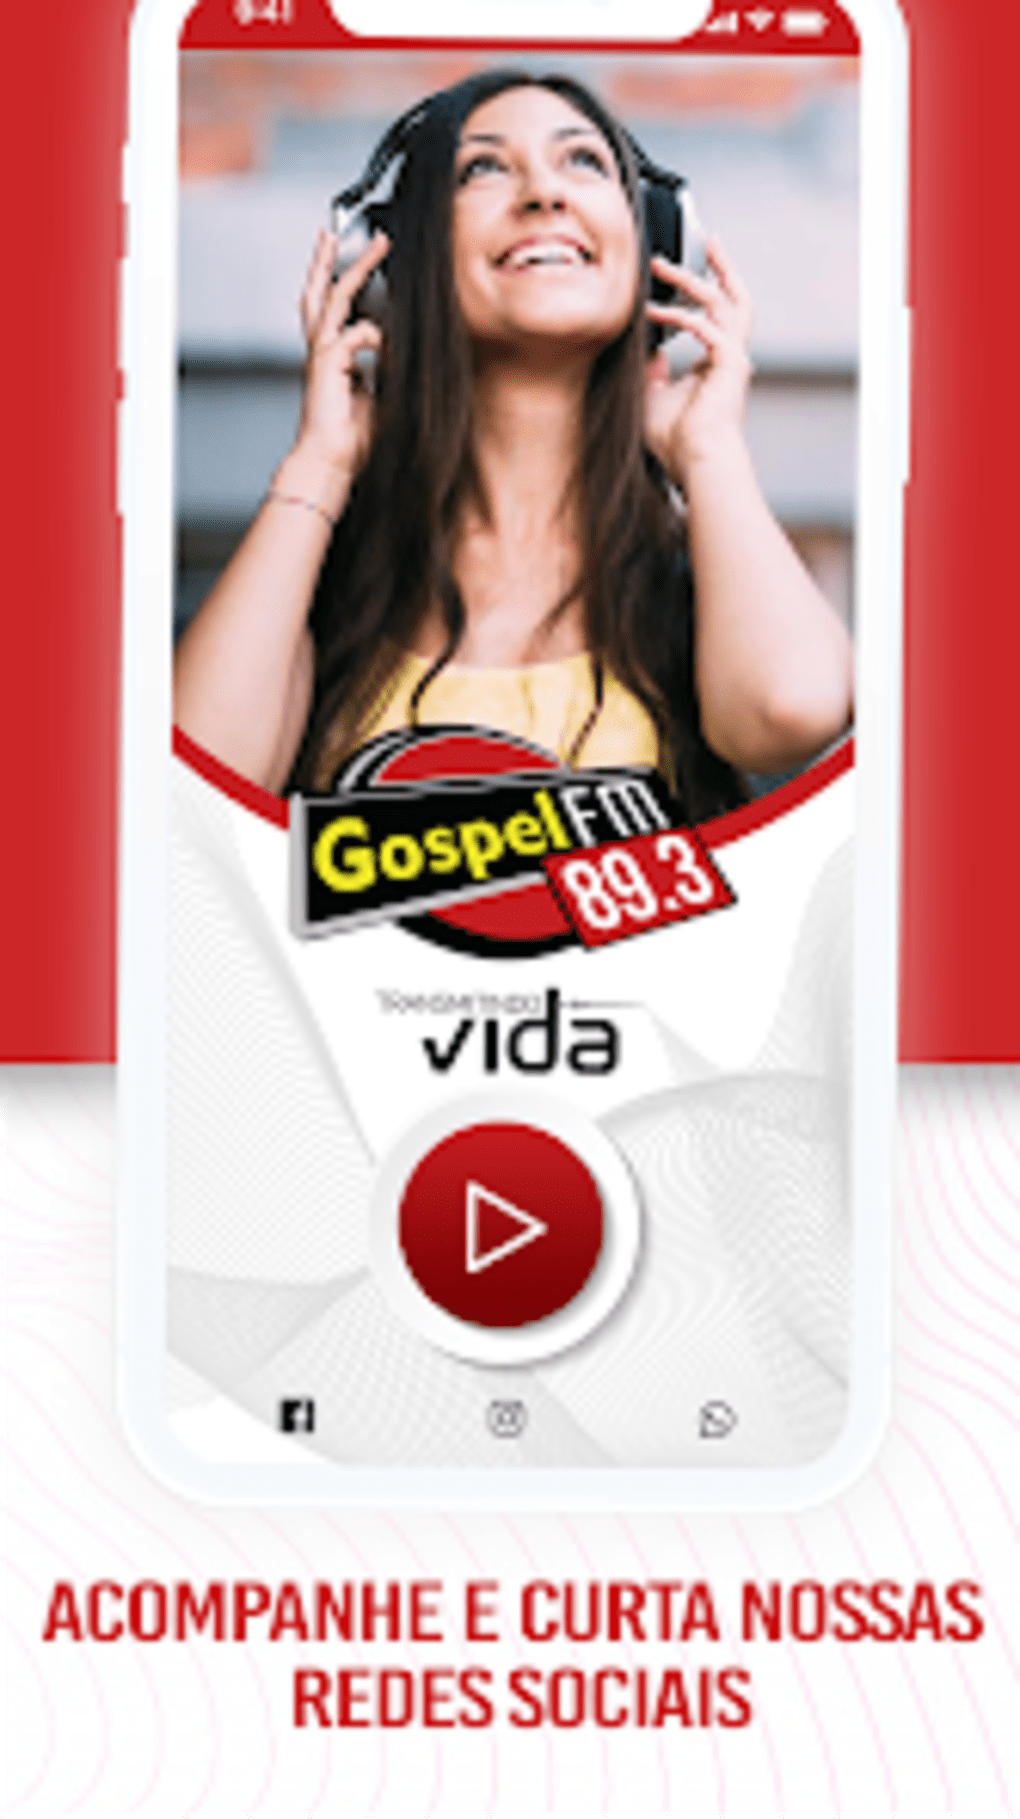 Radio Gospel FM 893 dla Android